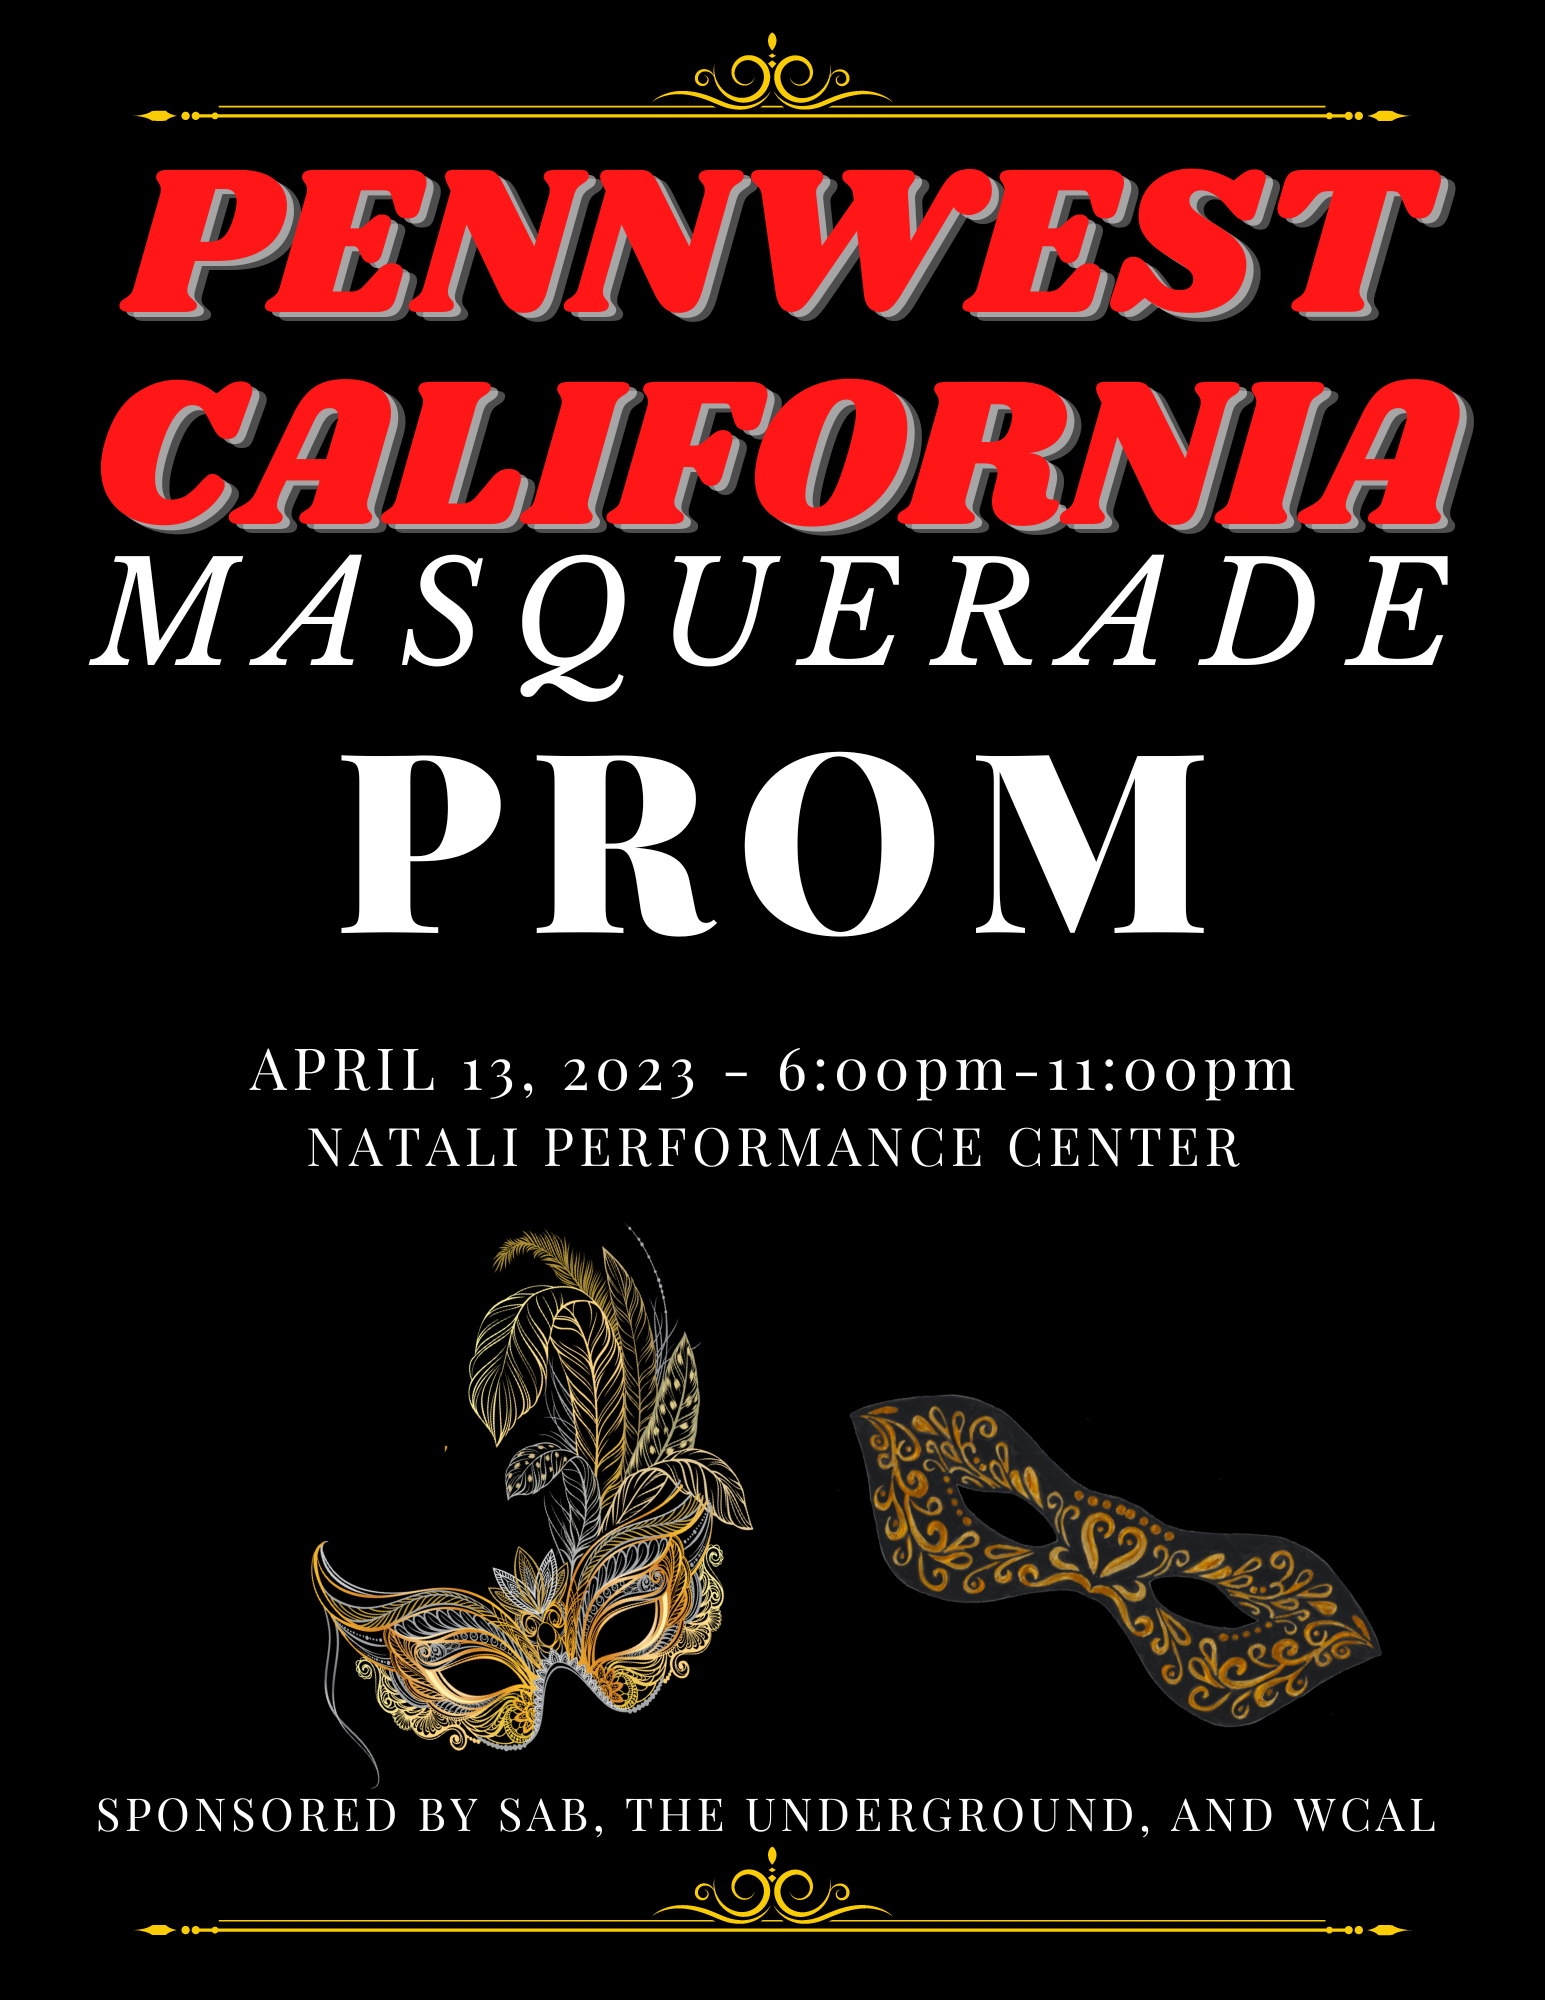 Masquerade Prom Poster